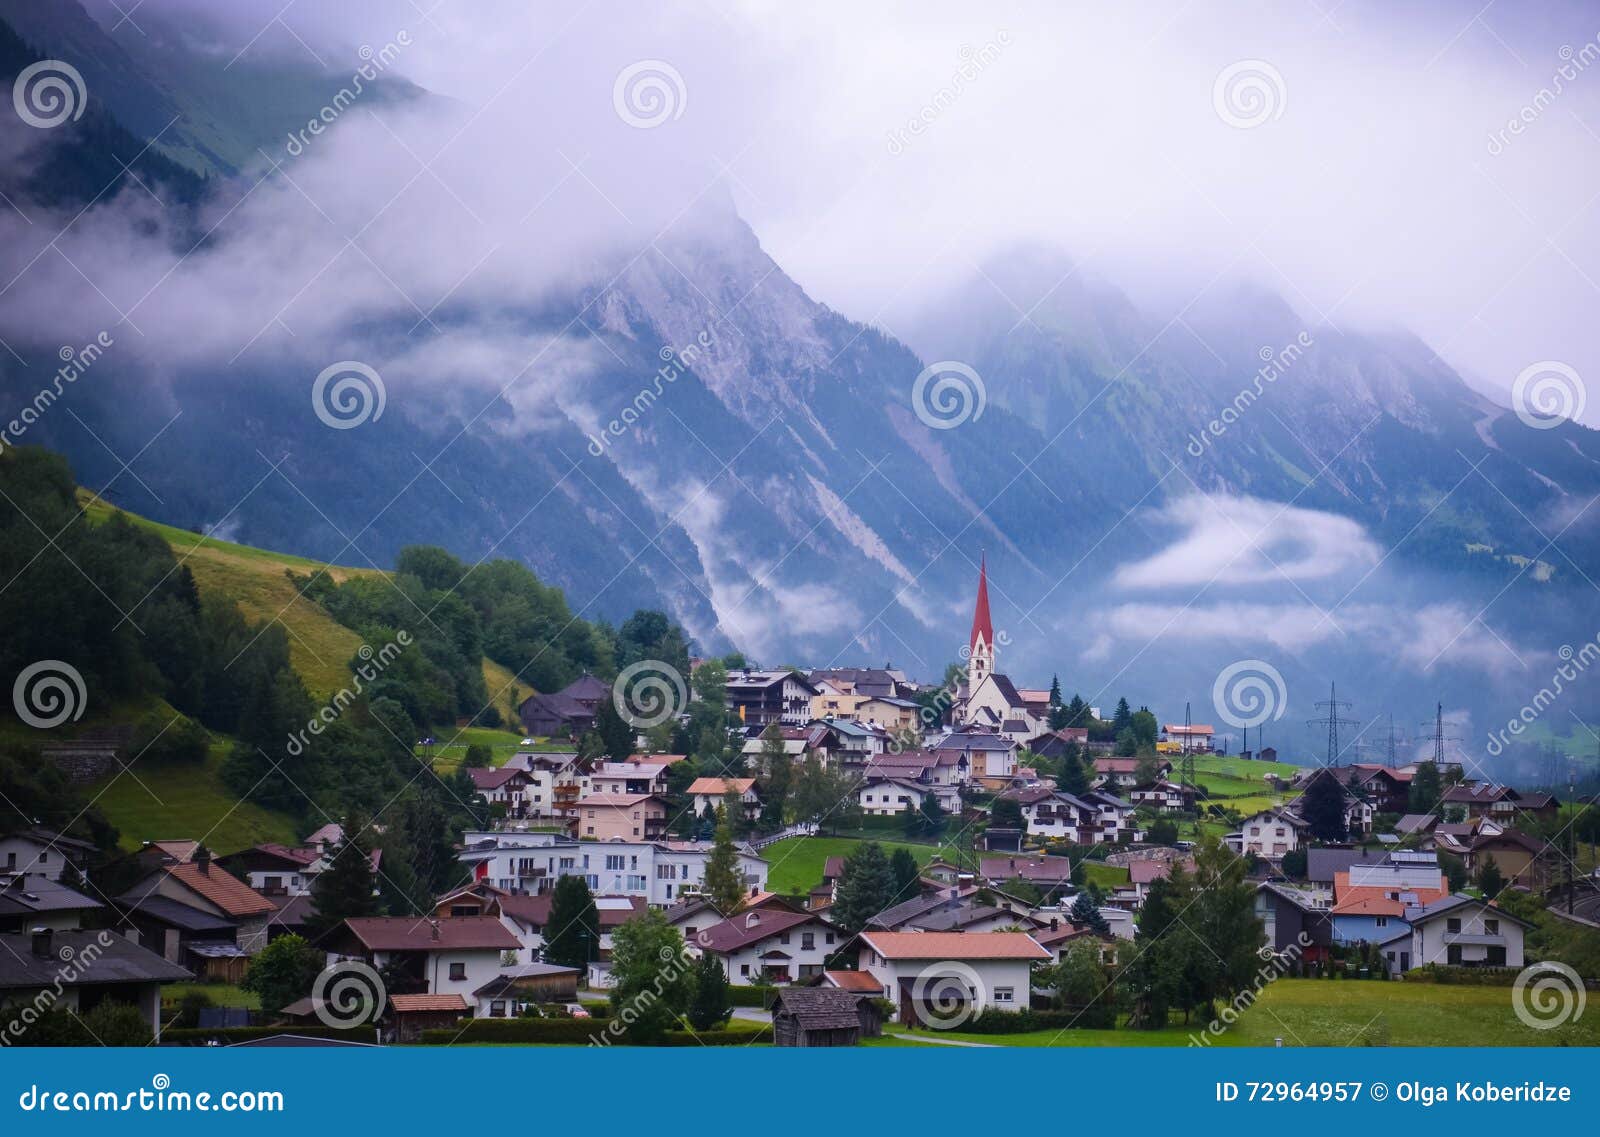 view of saint anton am arlberg in austria